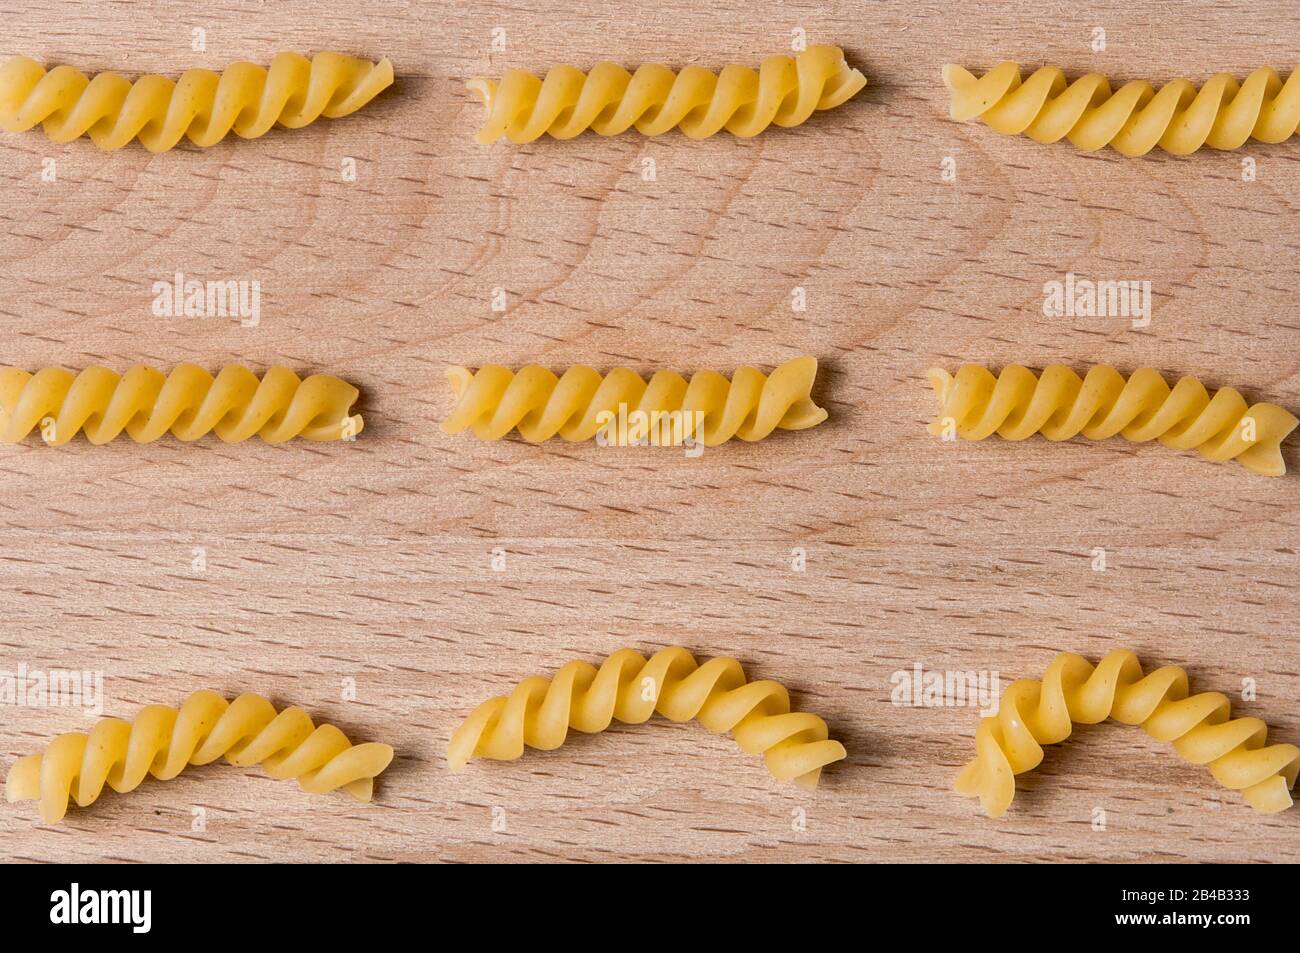 Pasta girandole types in wooden background. Italian noodles close up Stock Photo